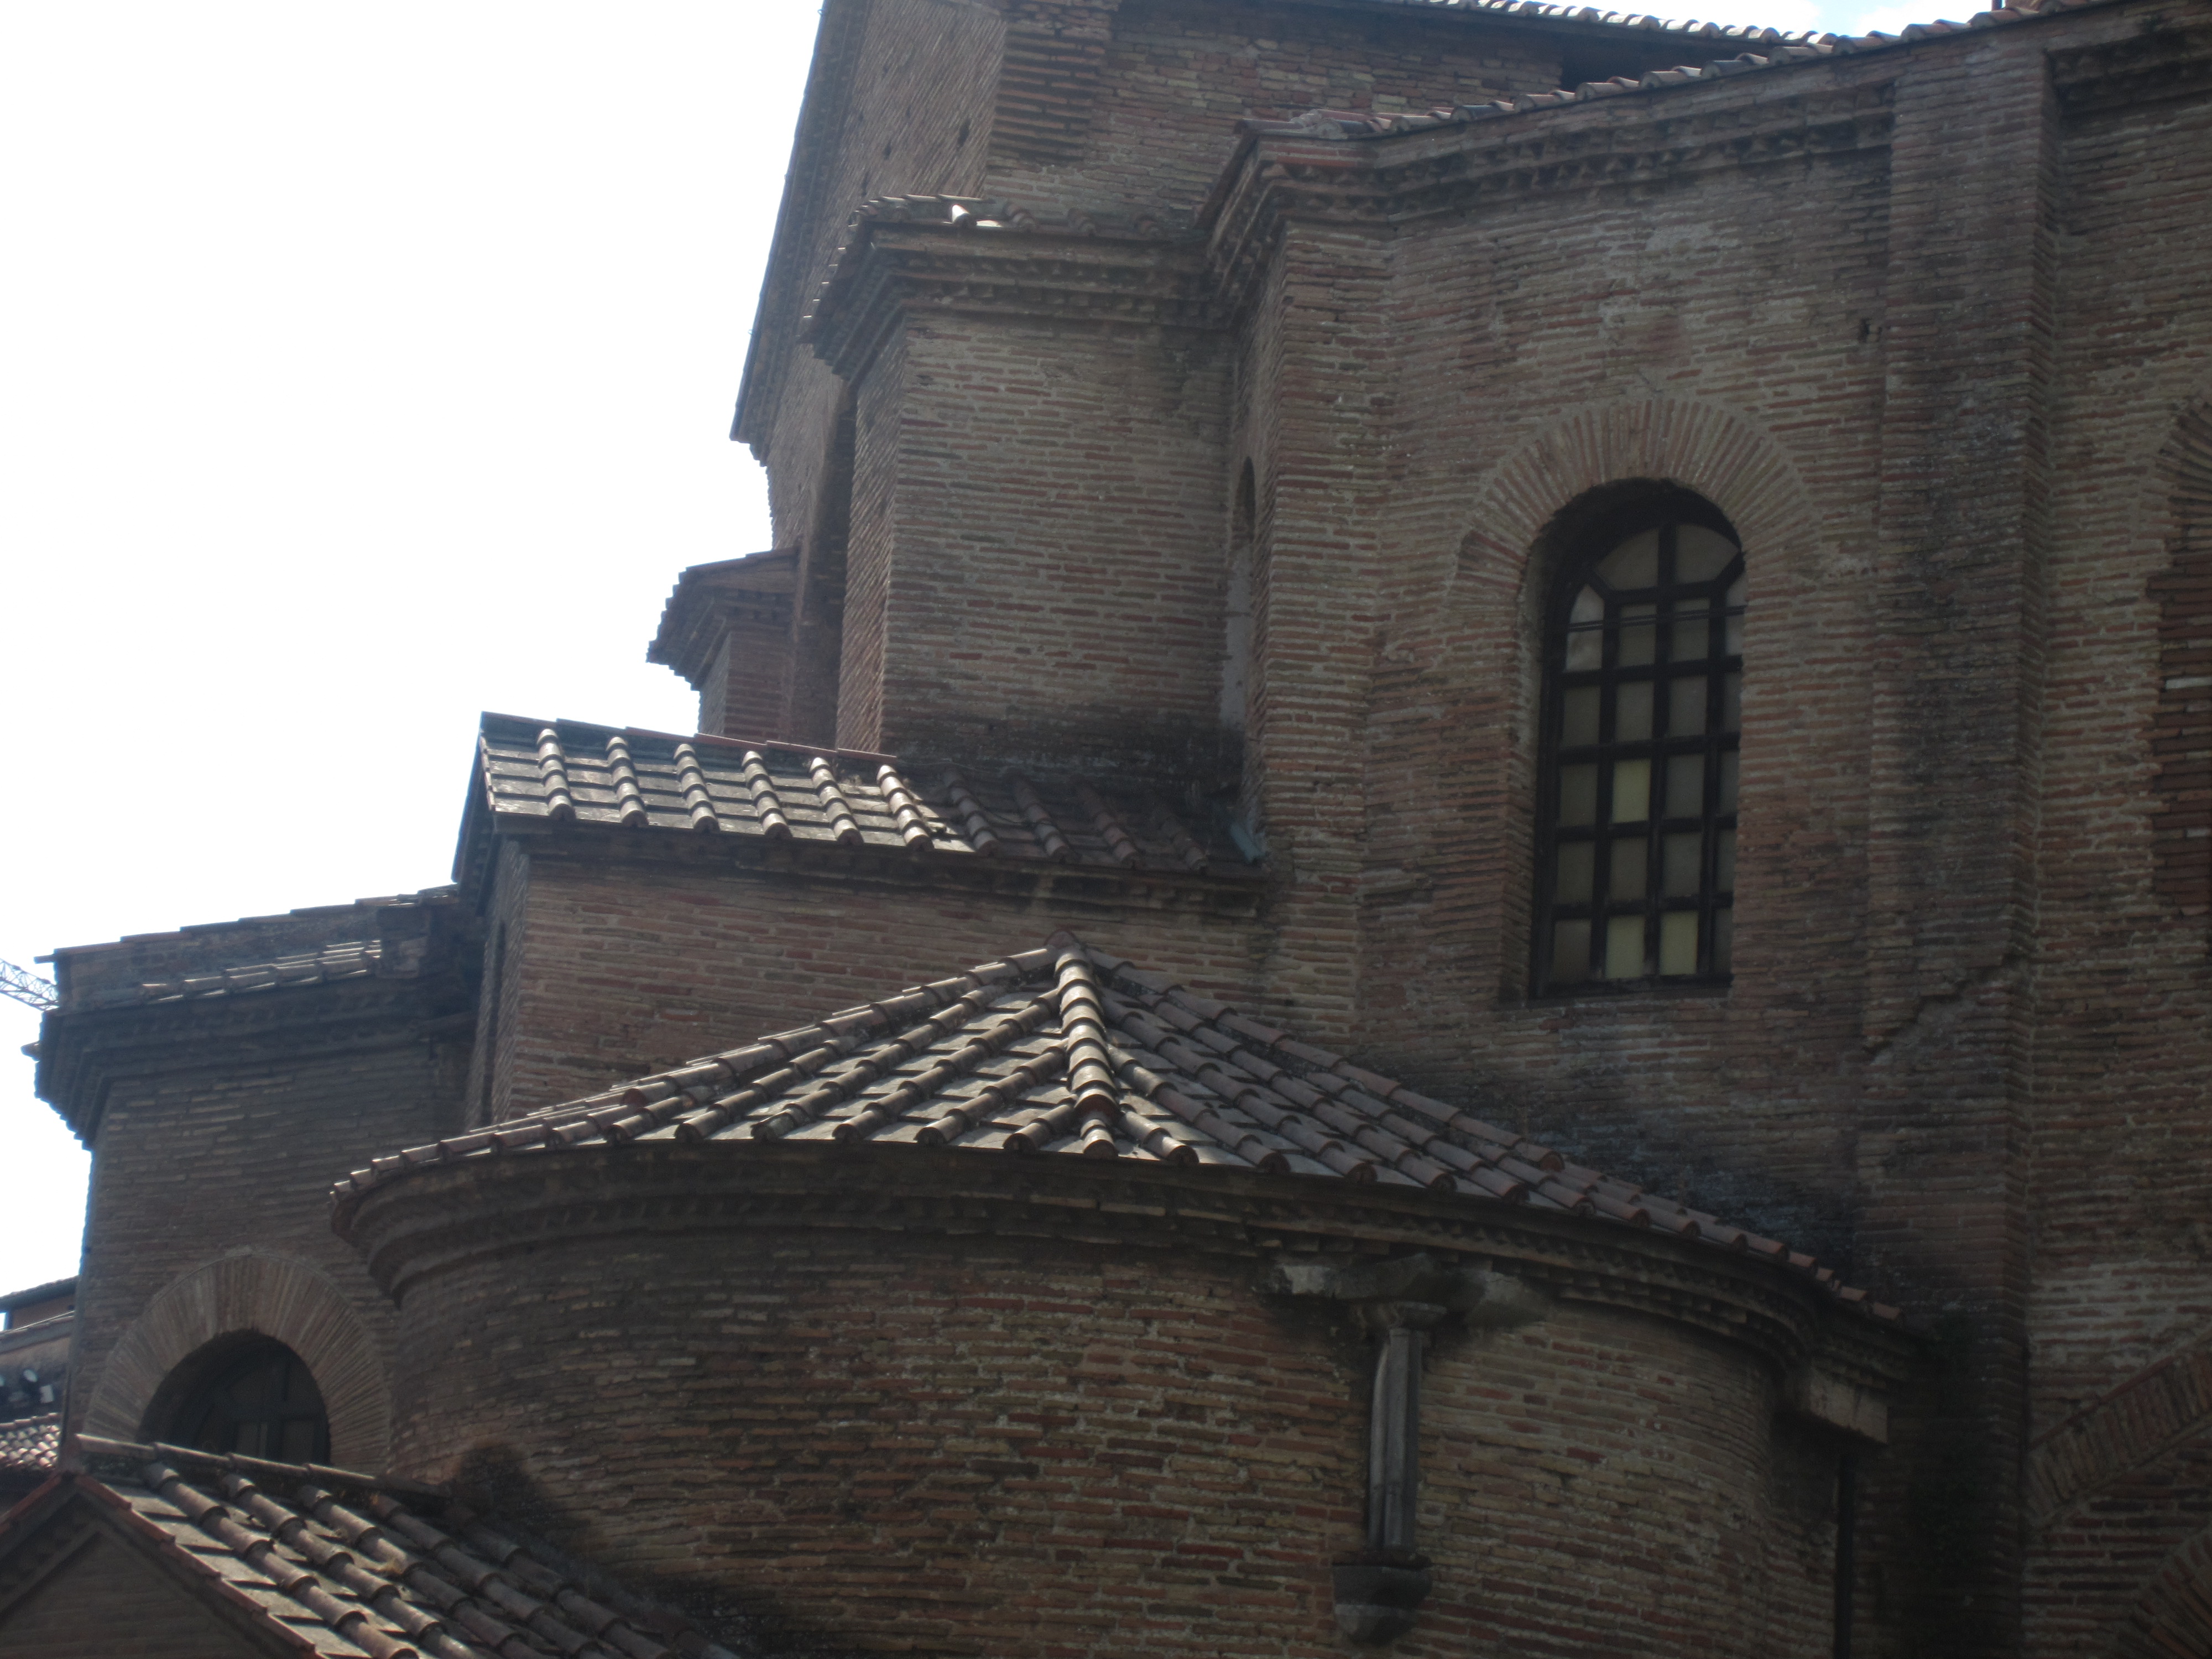 foto: https://upload.wikimedia.org/wikipedia/commons/5/52/Basilica_di_San_Vitale_-_dettagli.JPG